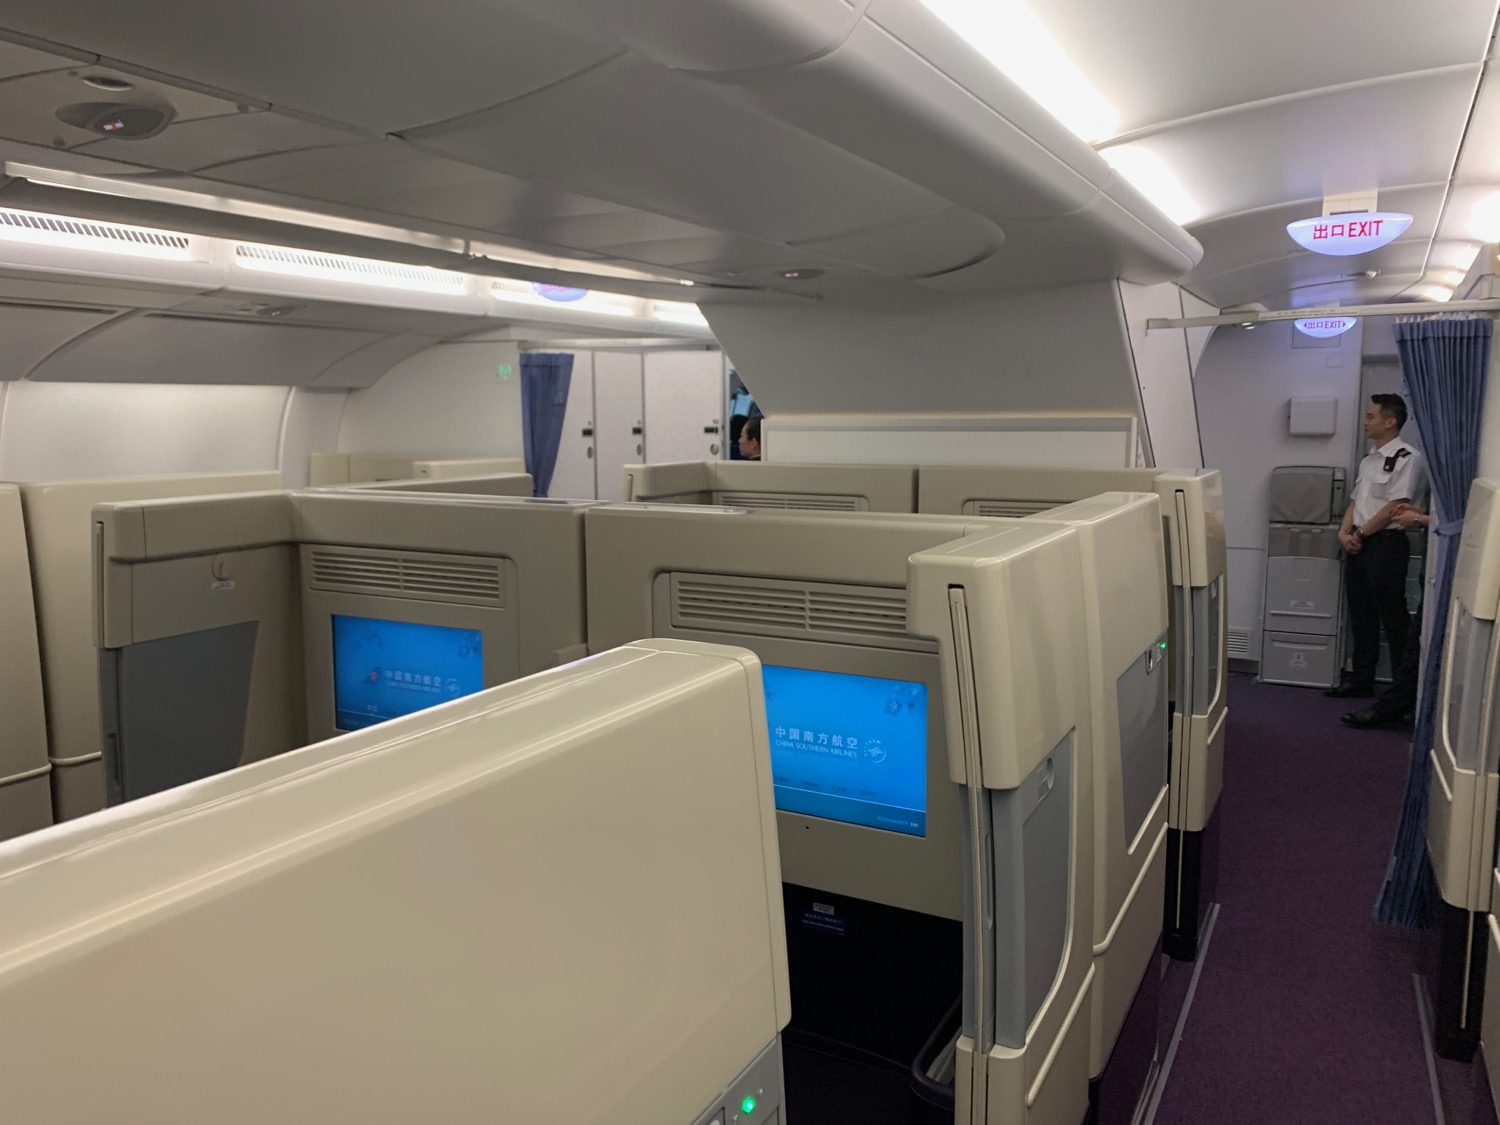 a row of white monitors on a plane